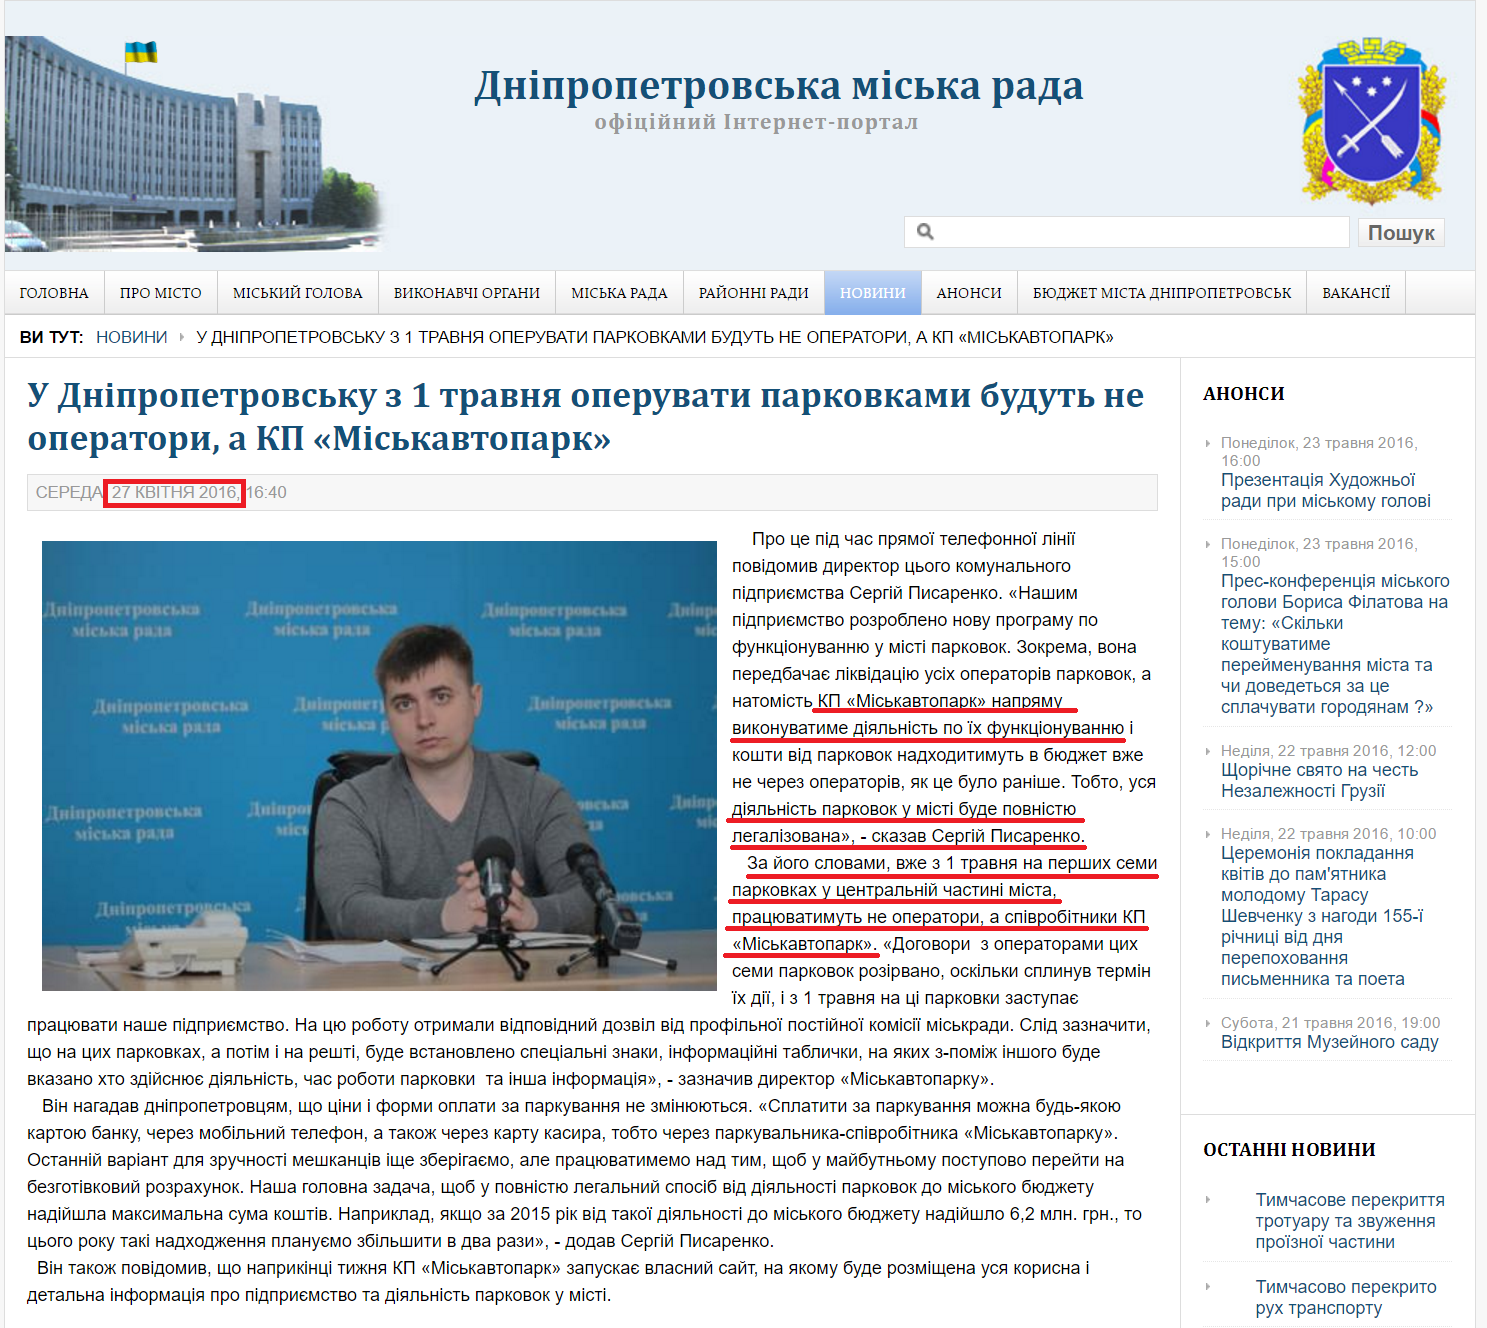 http://dniprorada.gov.ua/2016-04-27-14-41-35